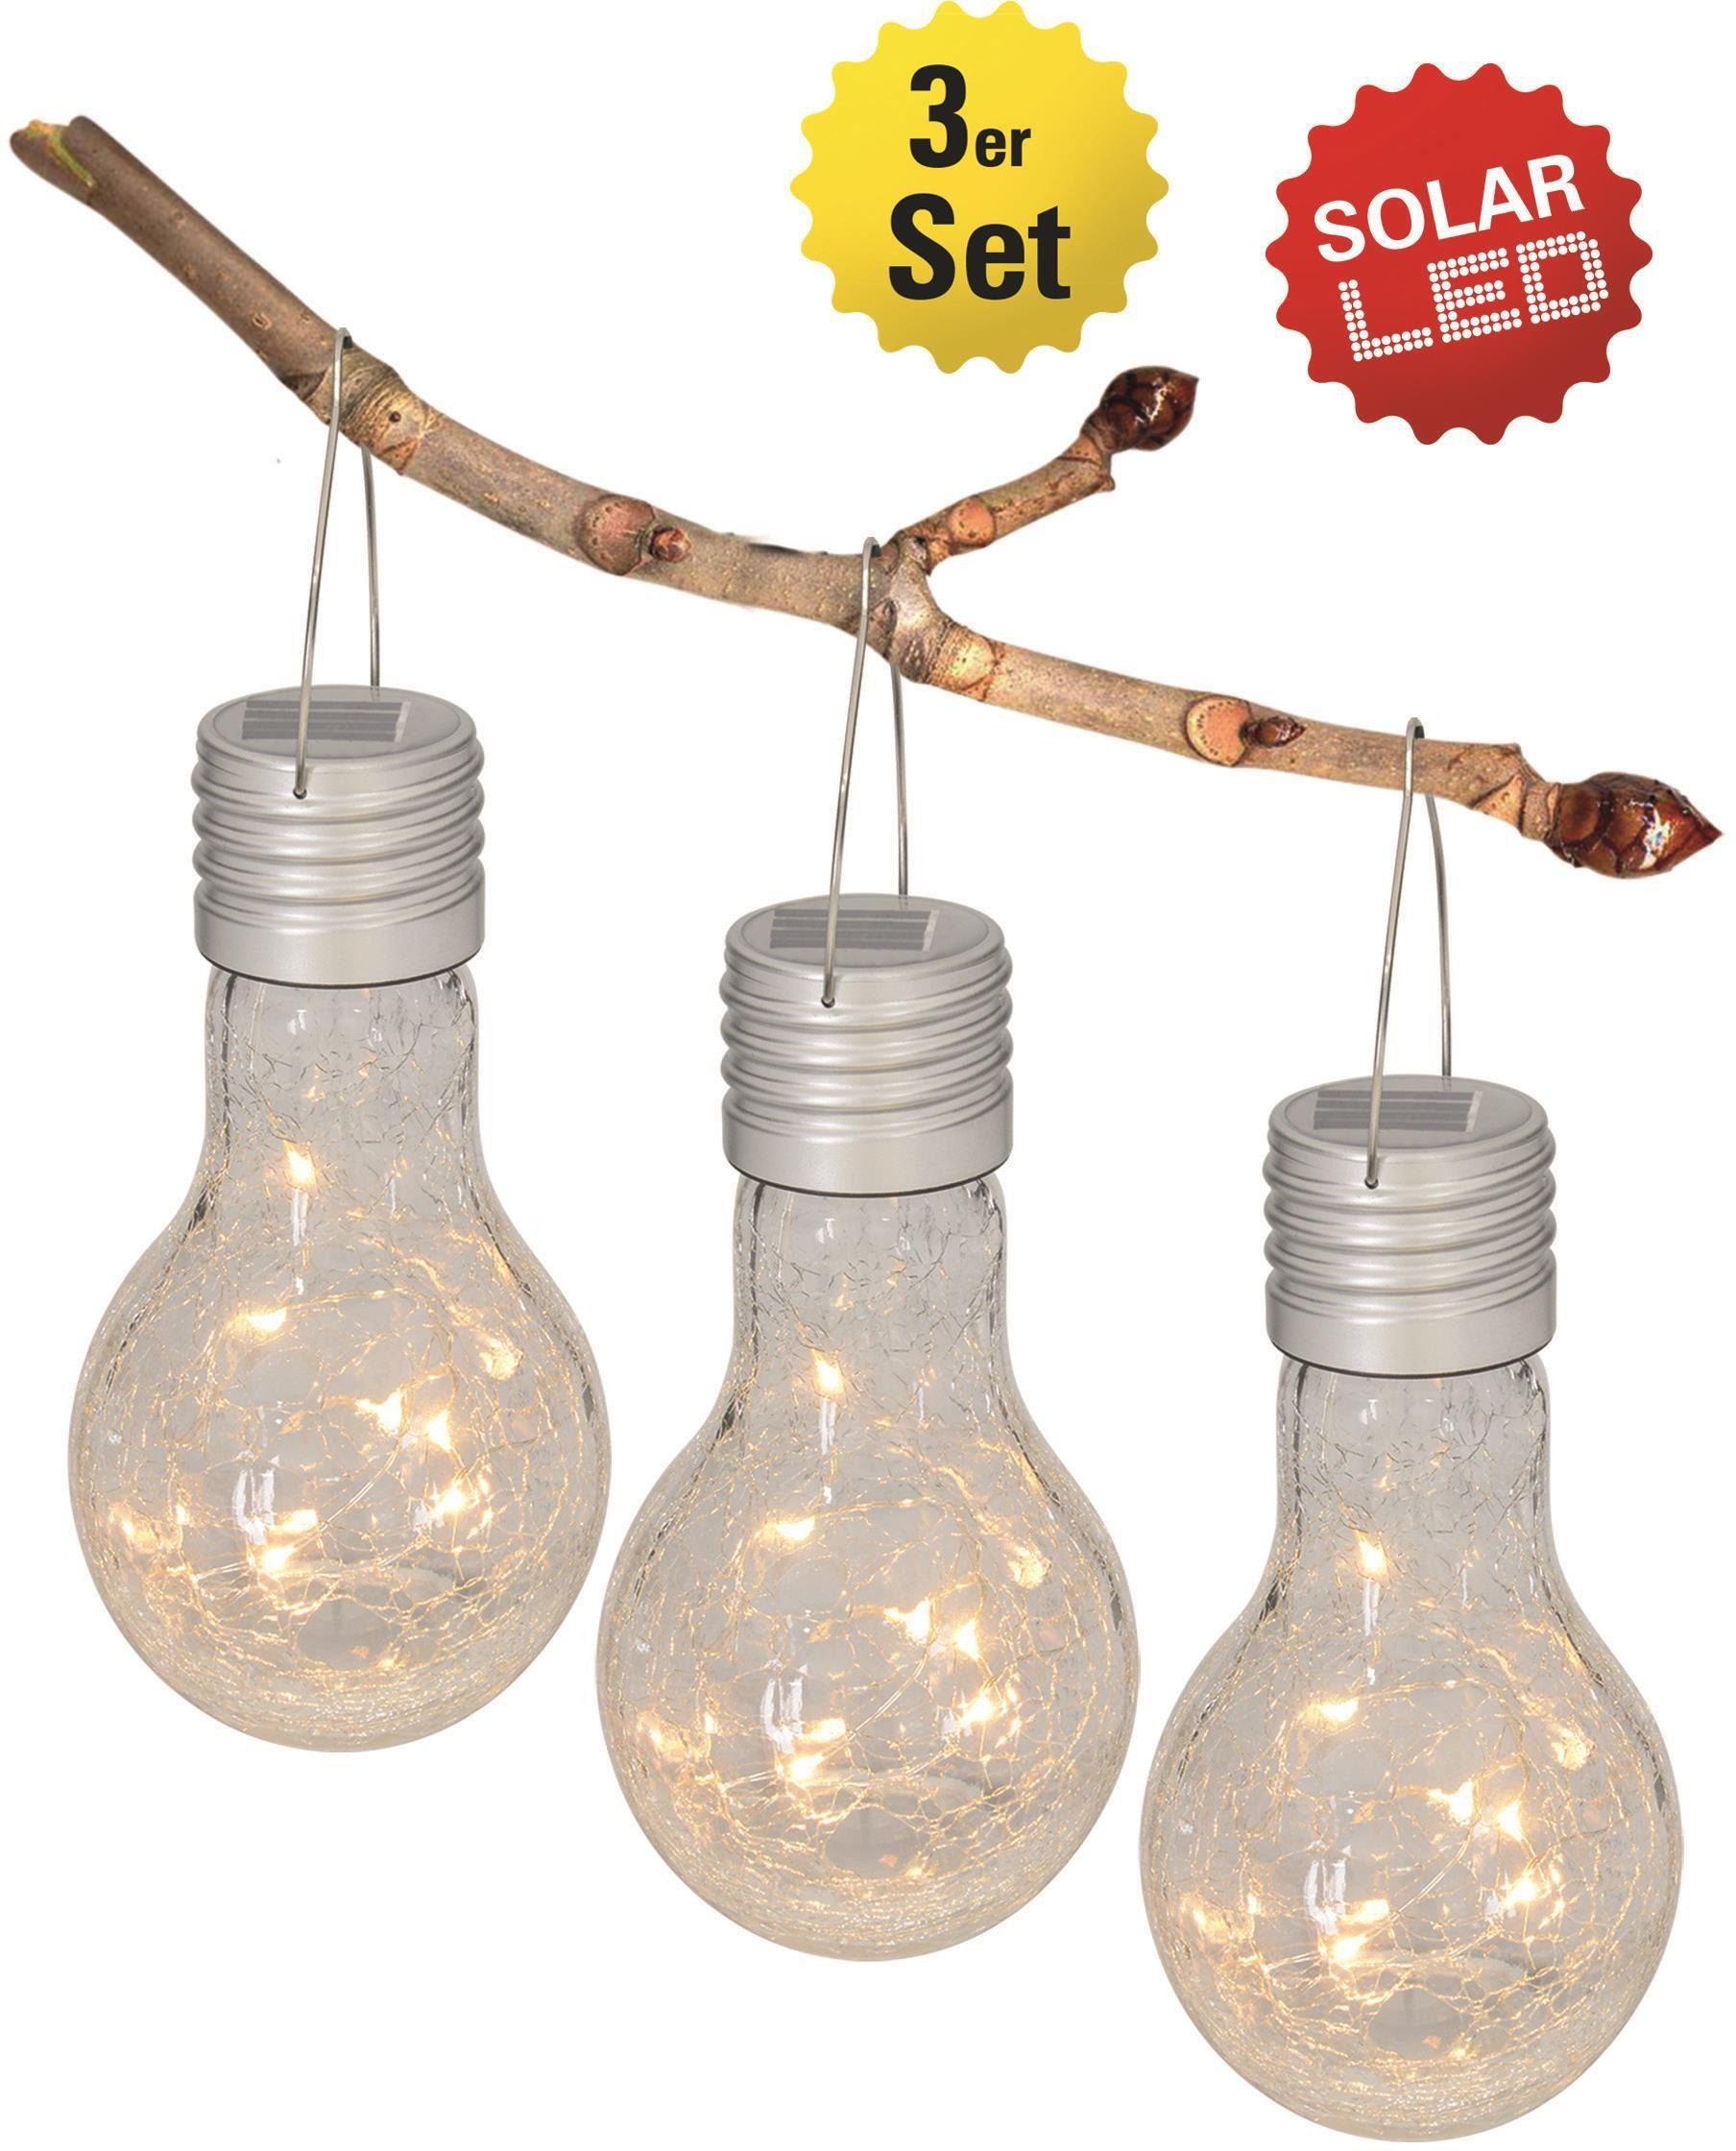 Warmweiß, integriert, Bulb, 3er Farbe: Glas, Aufhängemöglichkeit, Gartenleuchte klar, Set näve Material: LED Crackle fest LED